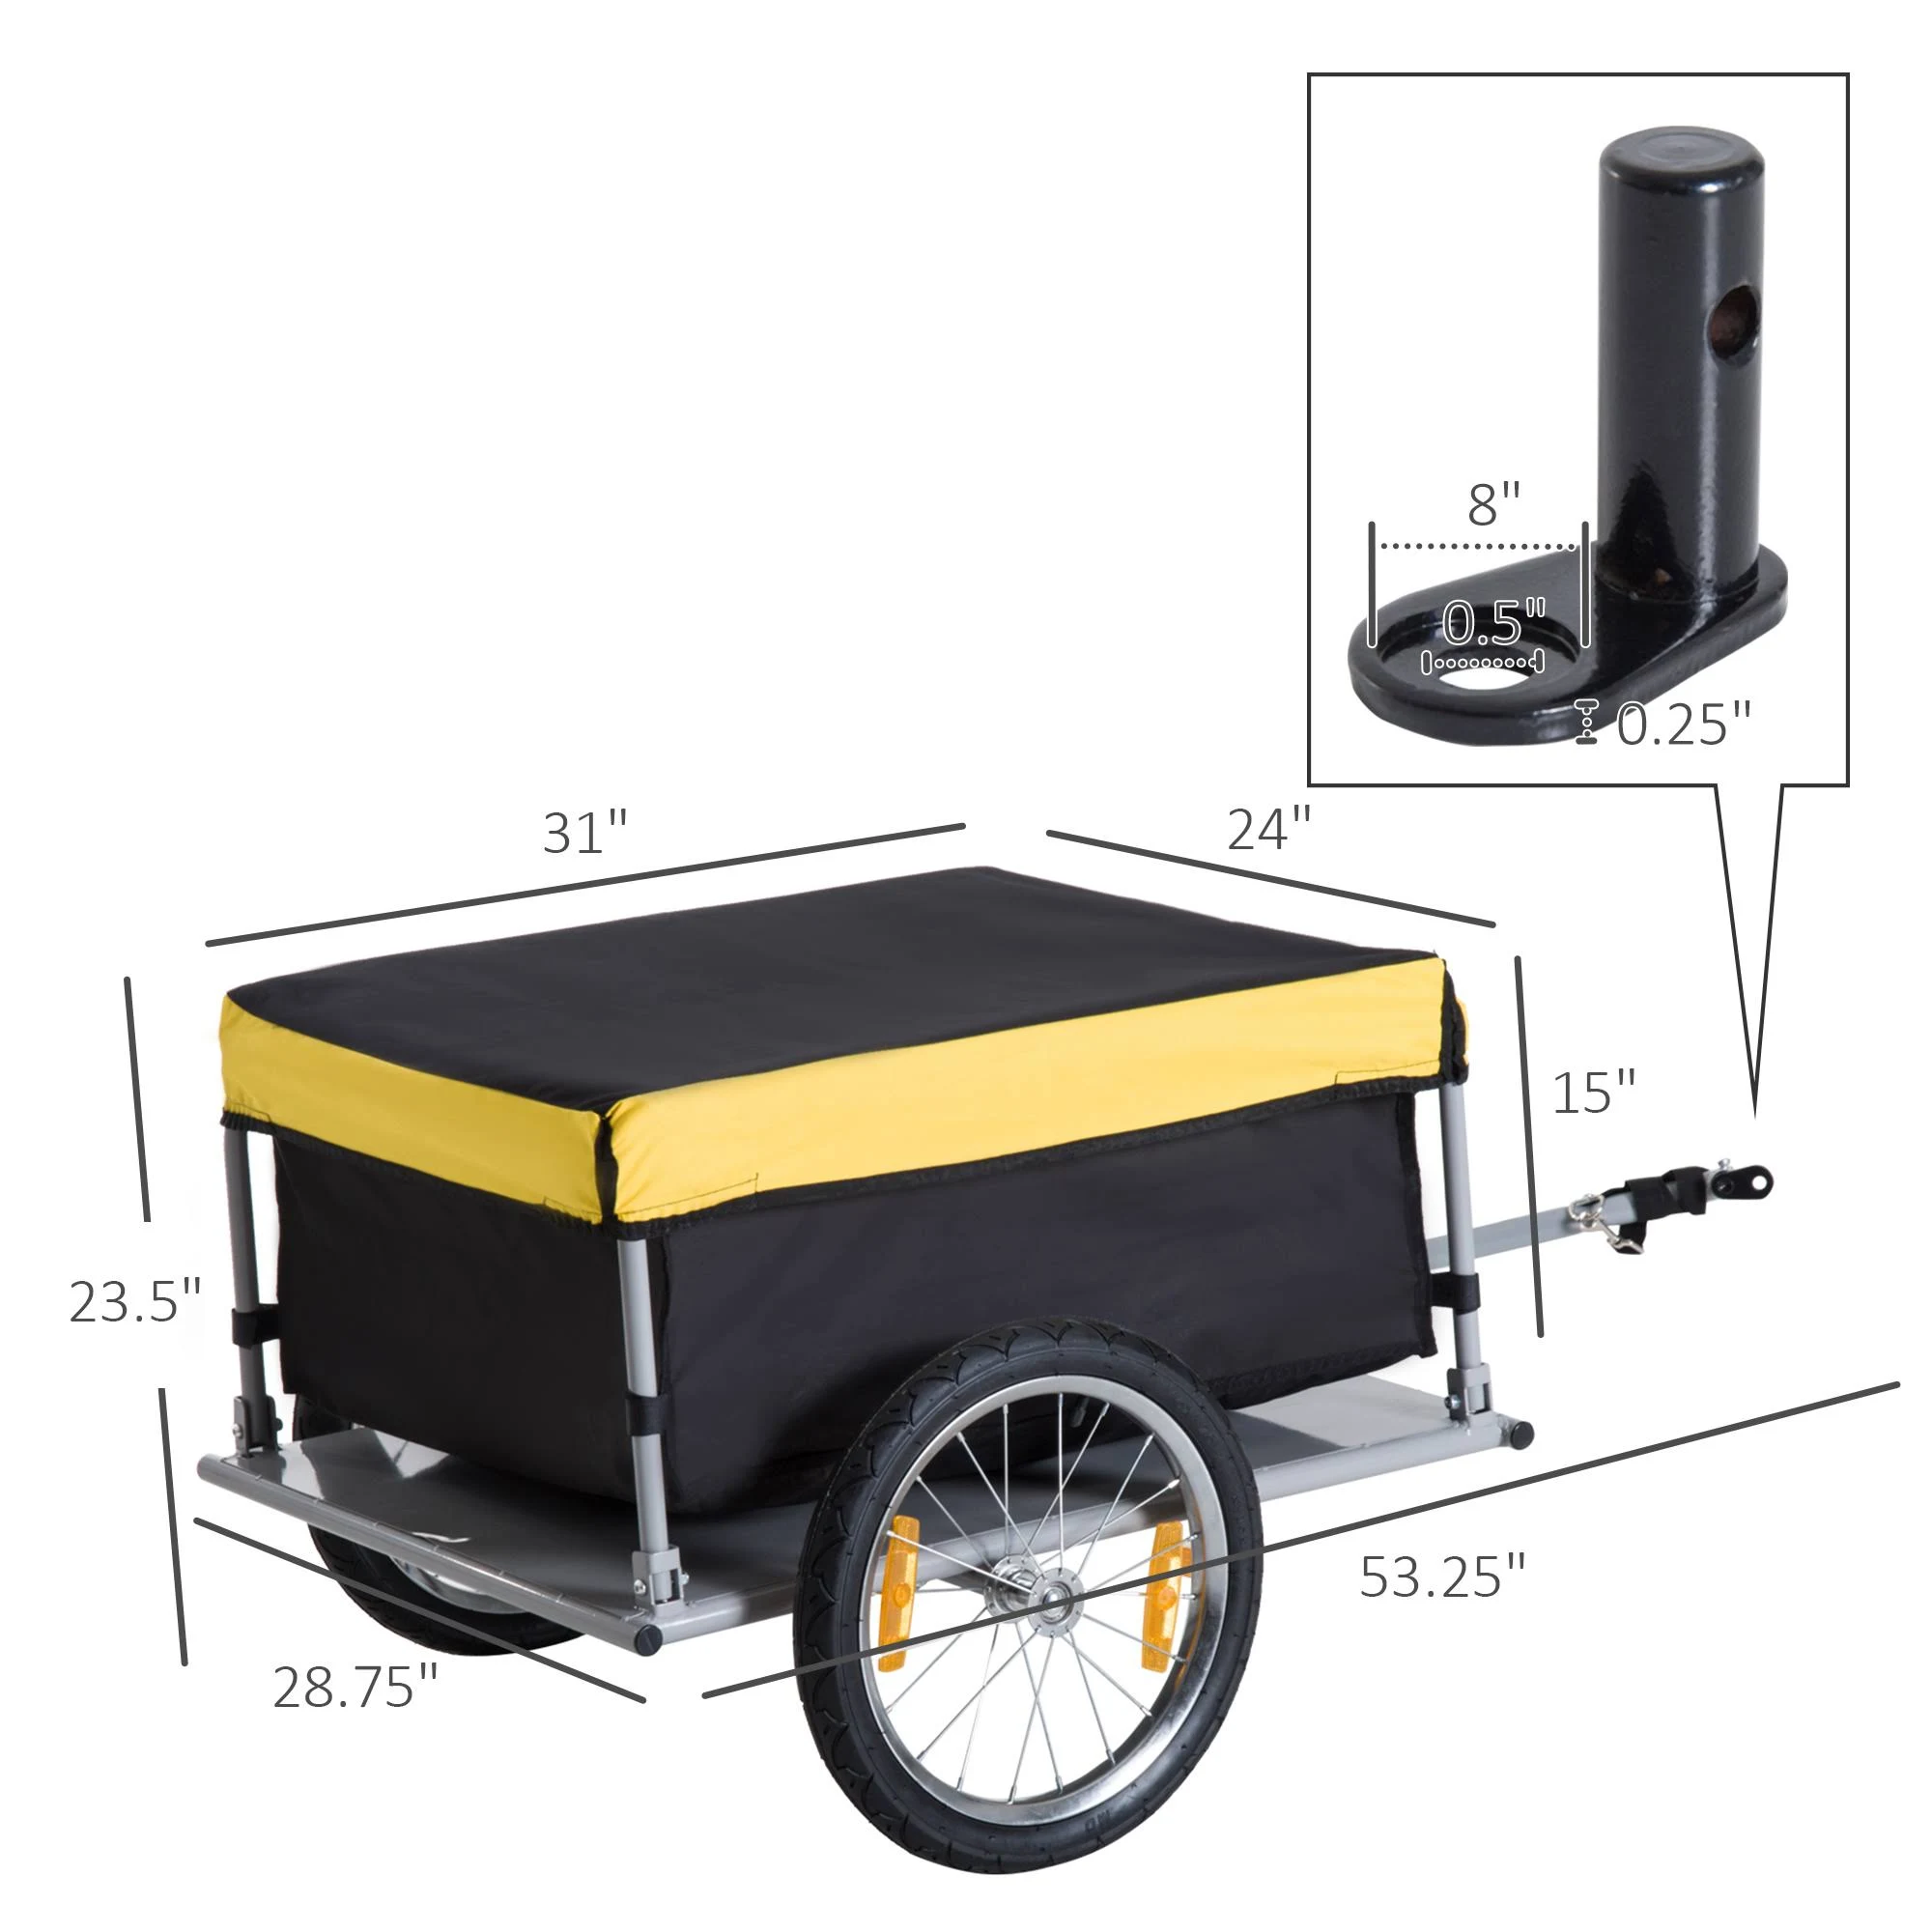 Aosom Elite Bike Cargo / Luggage Trailer  C Yellow / Black